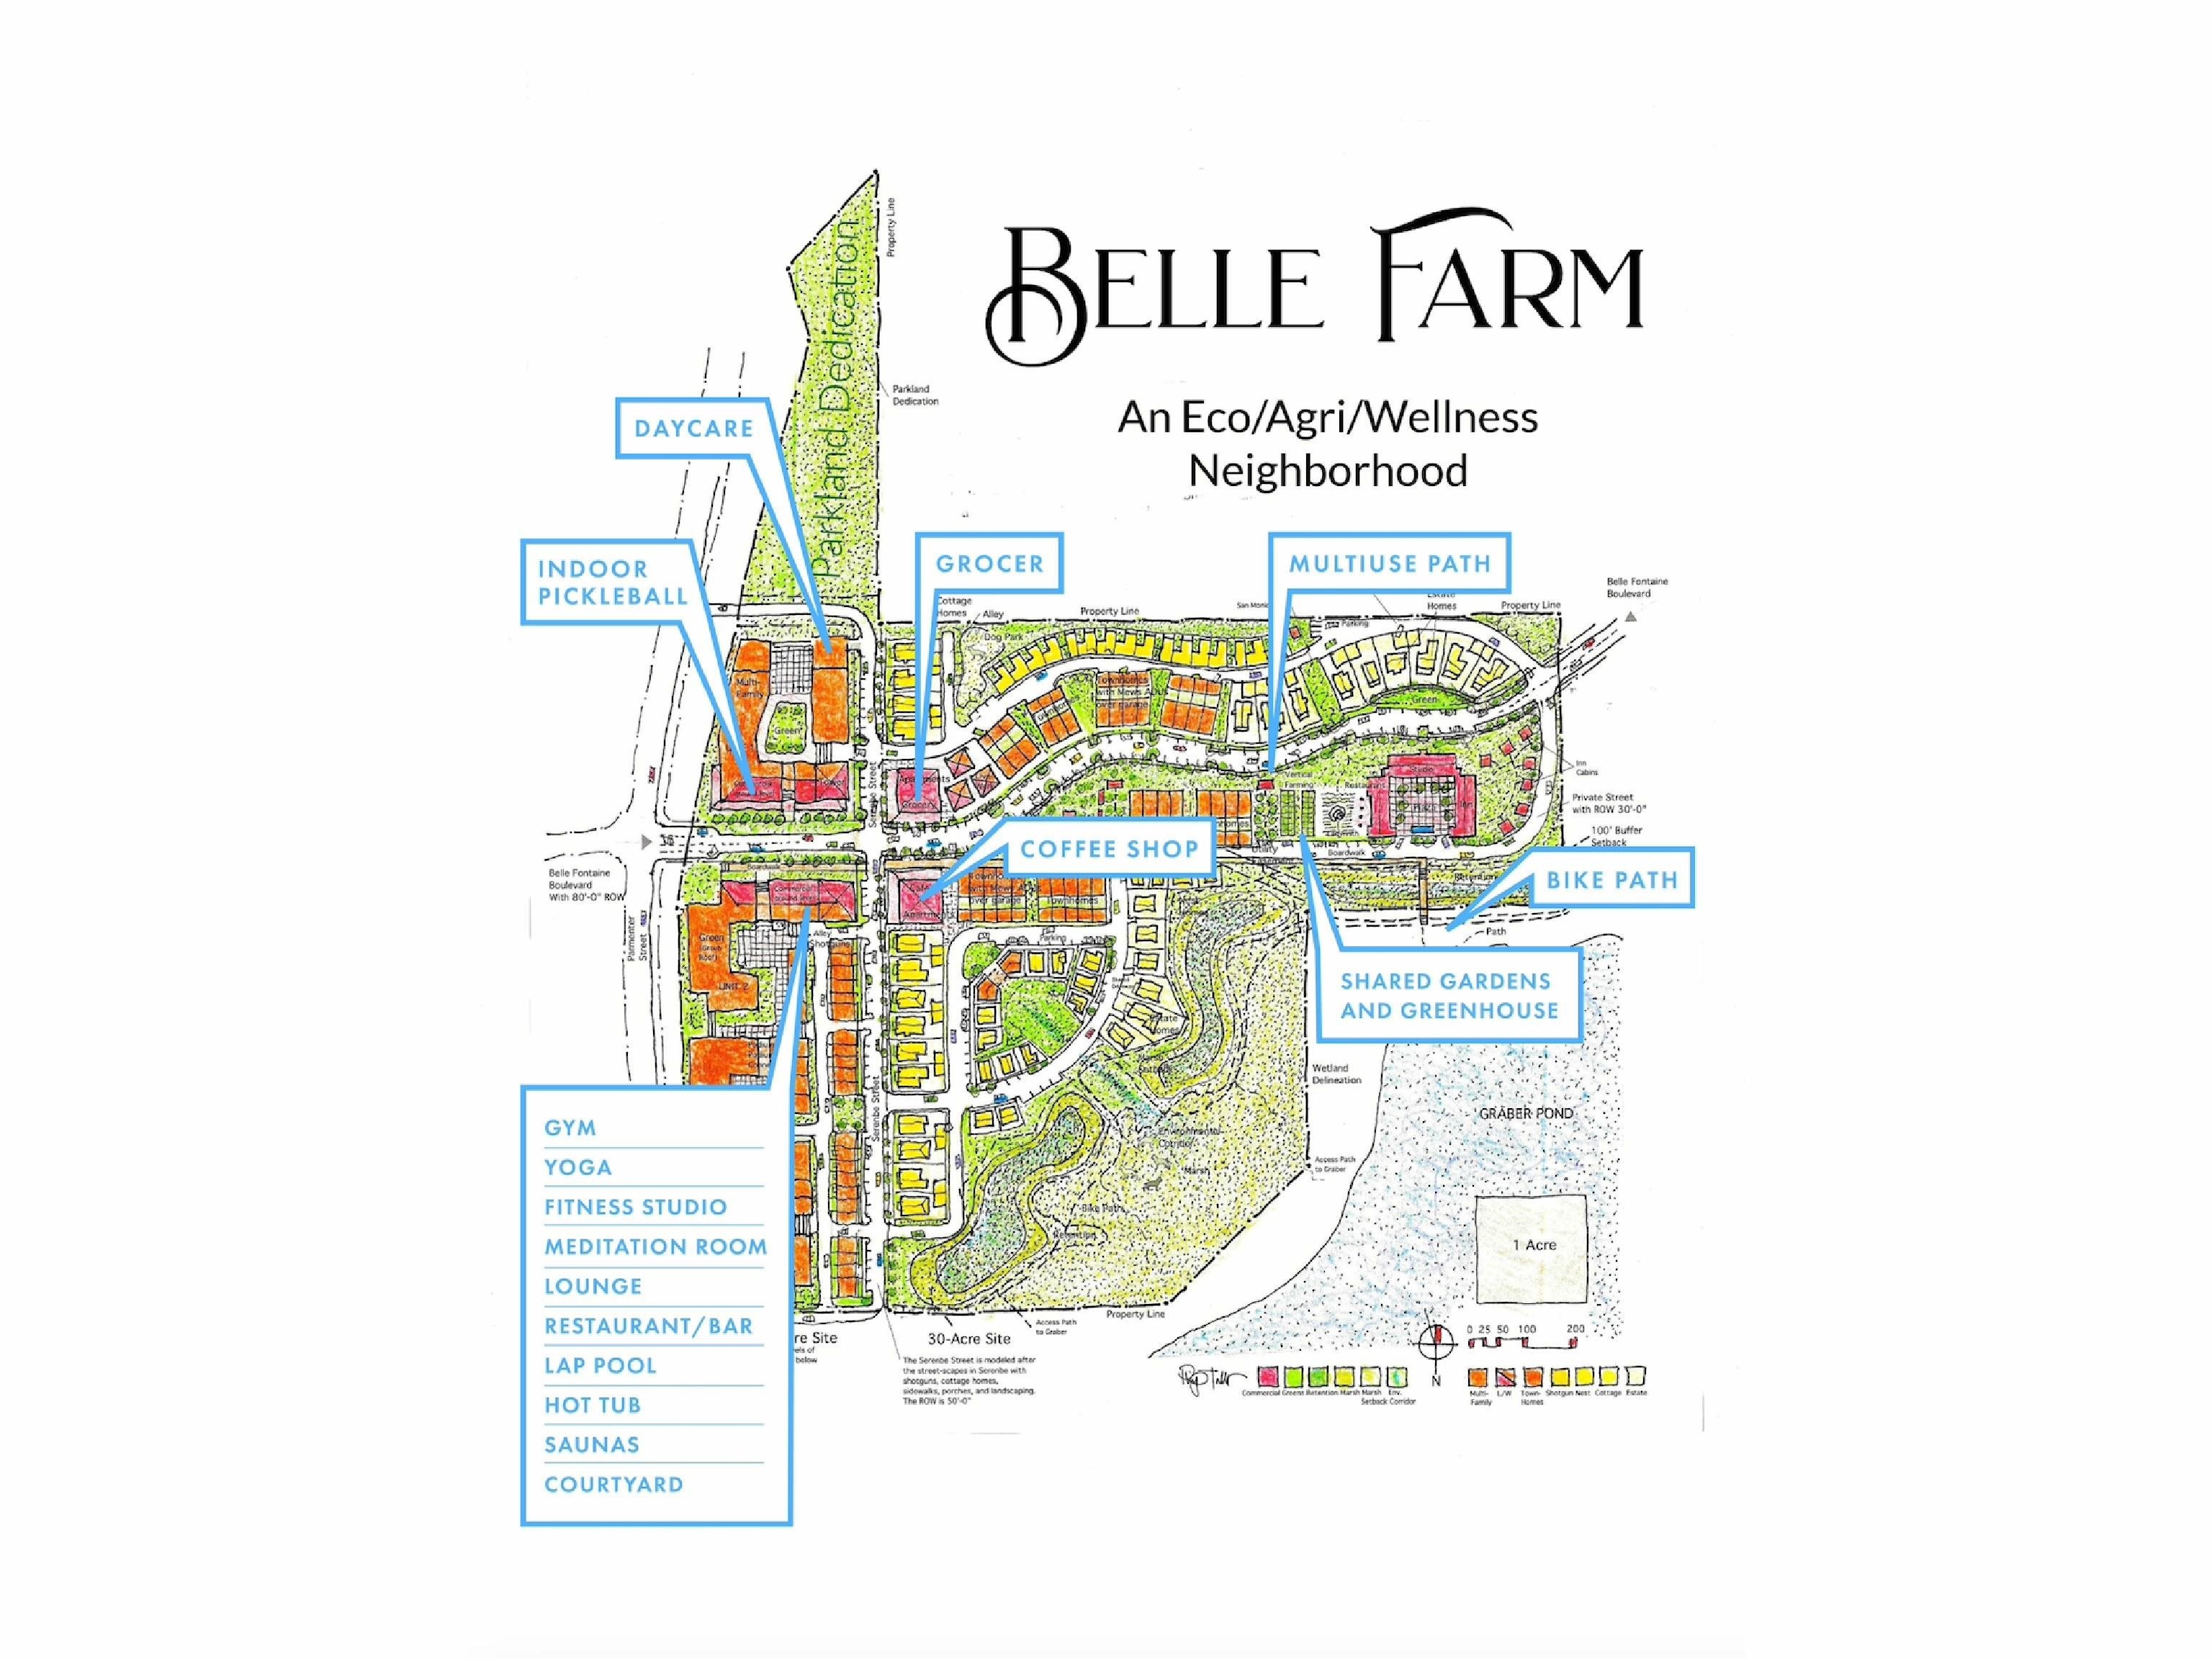 2. Lot 29 Belle Farm